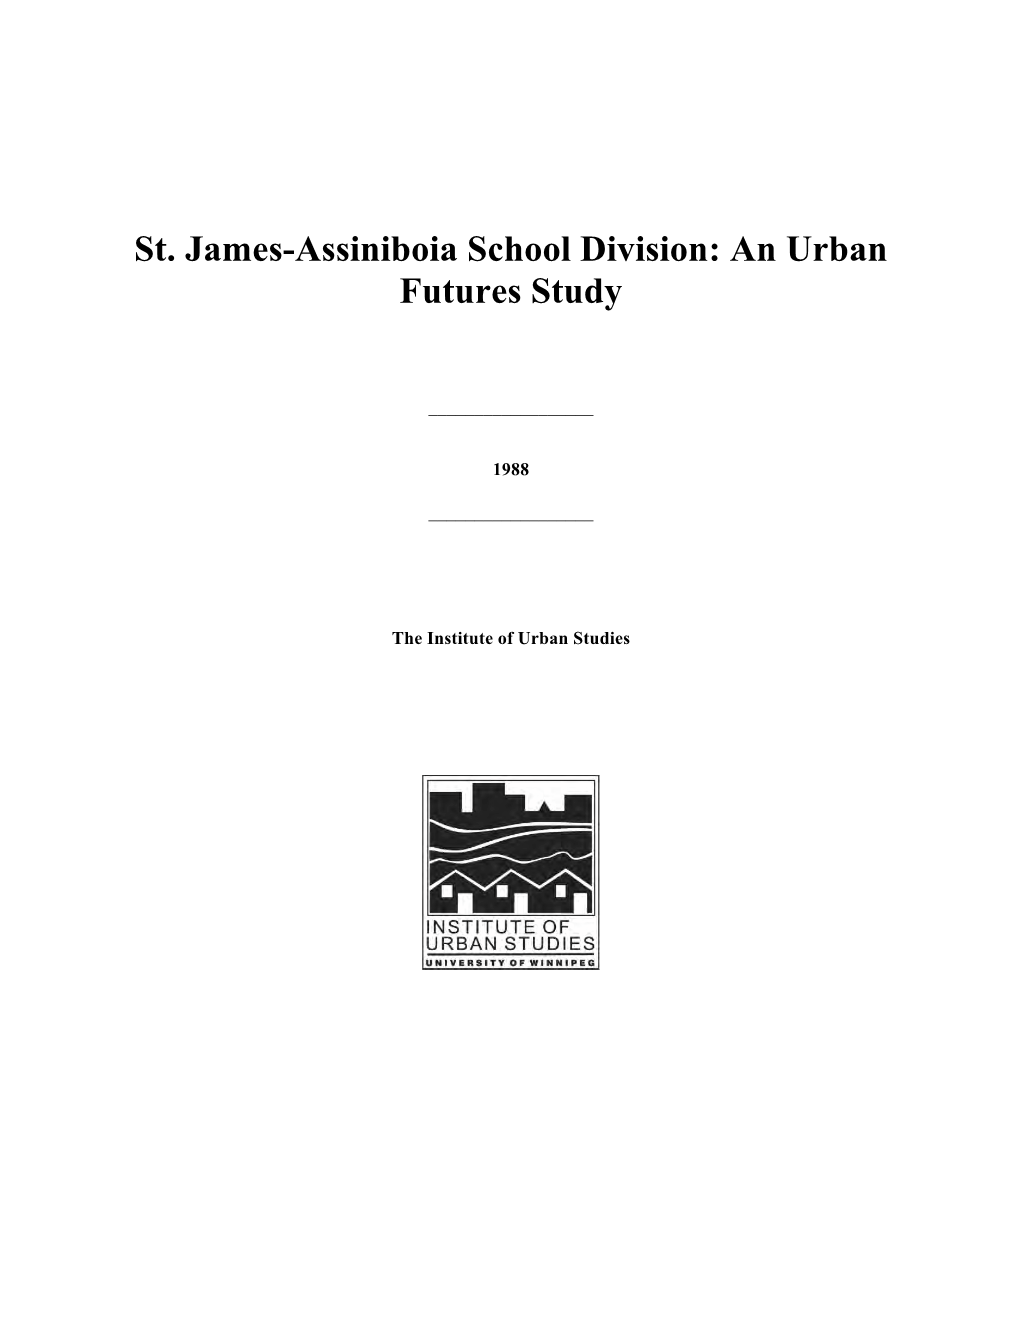 St. James-Assiniboia School Division: an Urban Futures Study